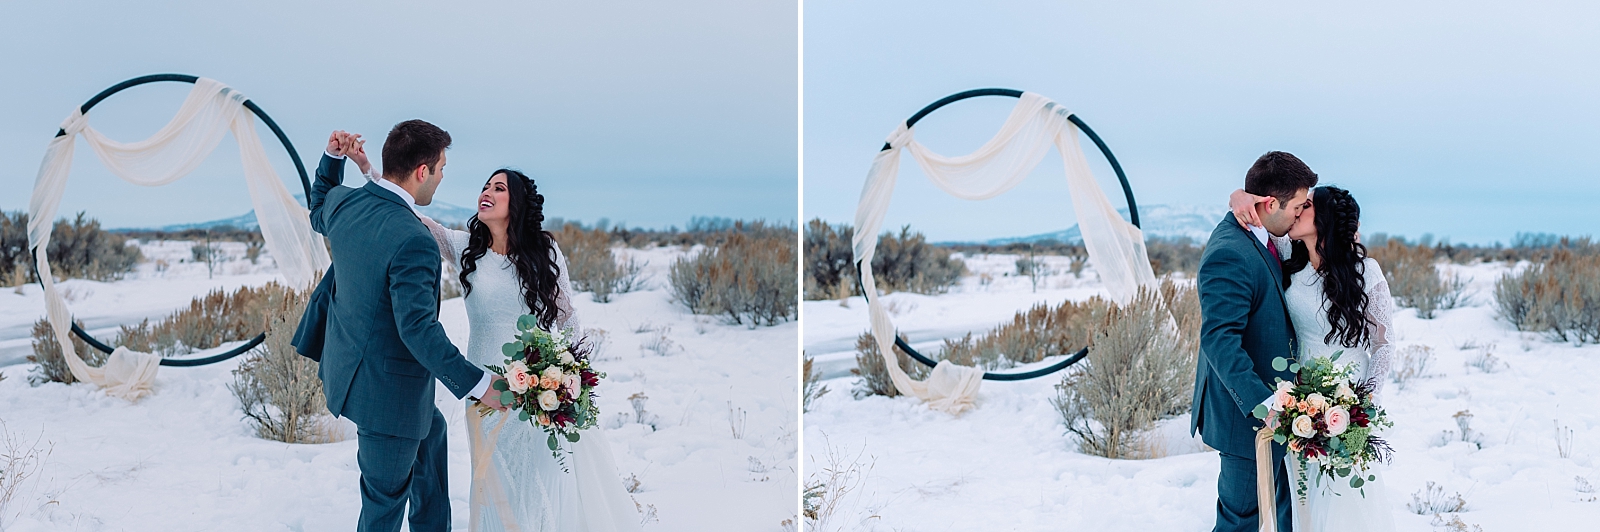 bride and groom walking through snow winter wedding romantic playful